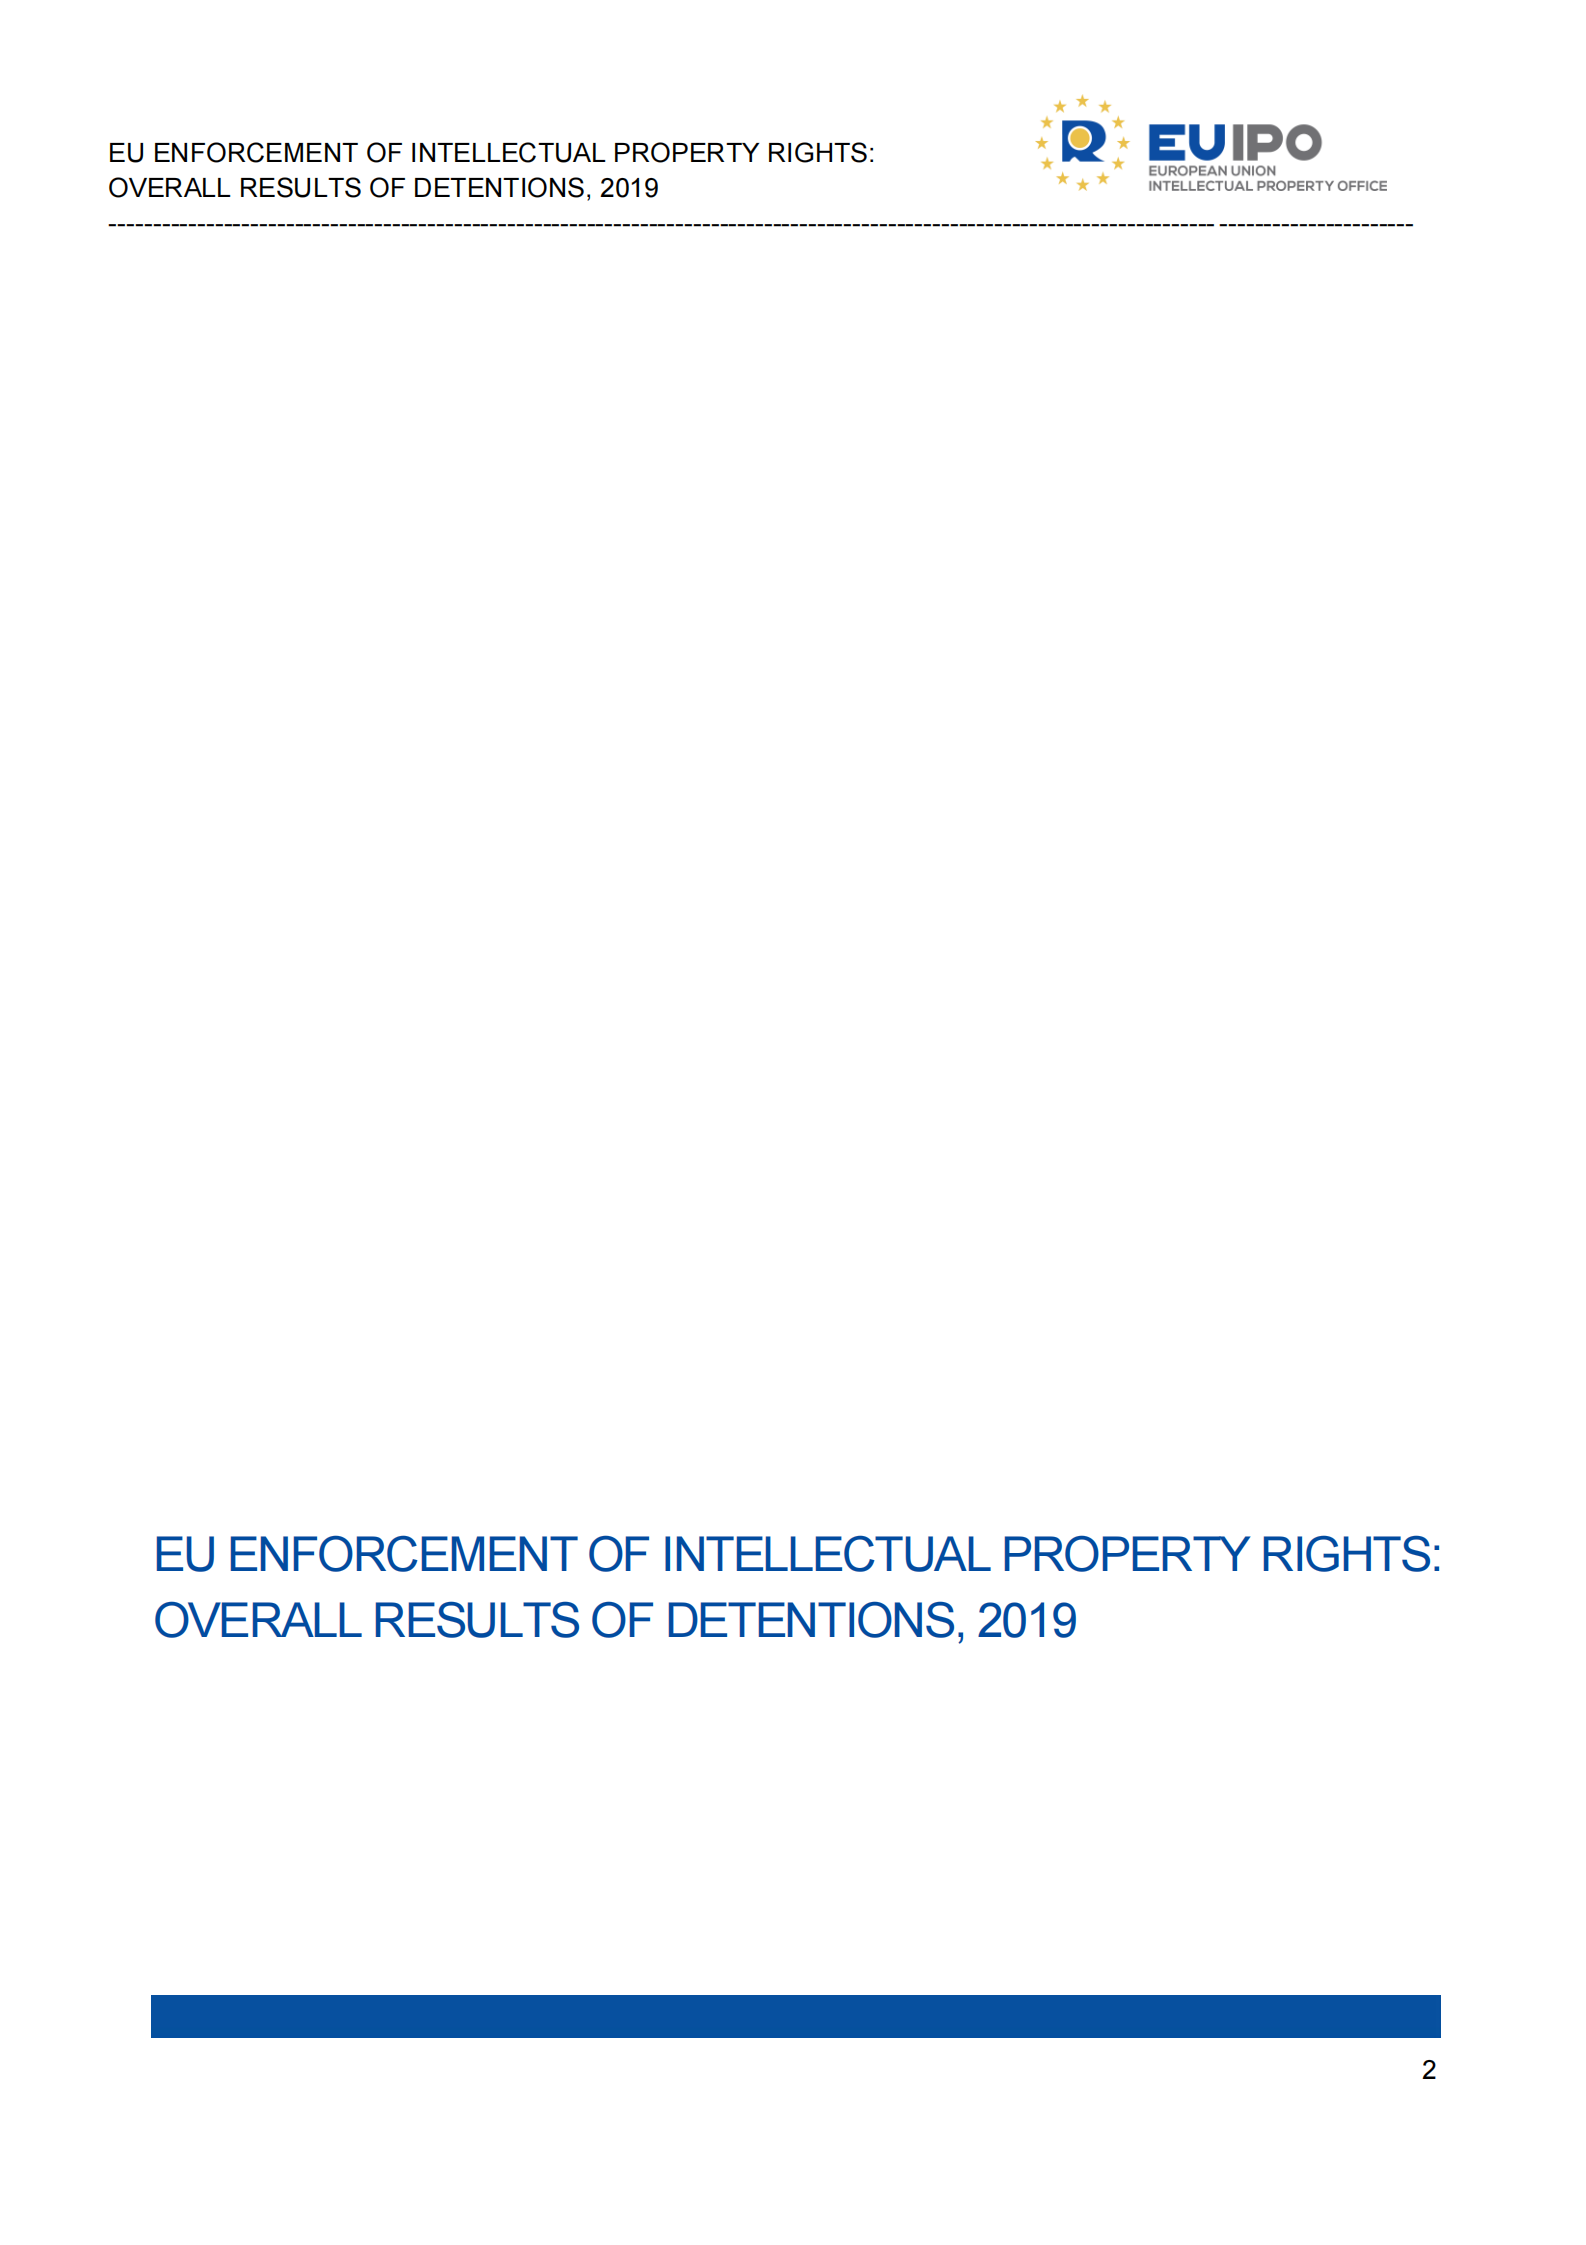 2021_Report_on_overall_EU_detentions_during_2019_ExSum_en_01.png